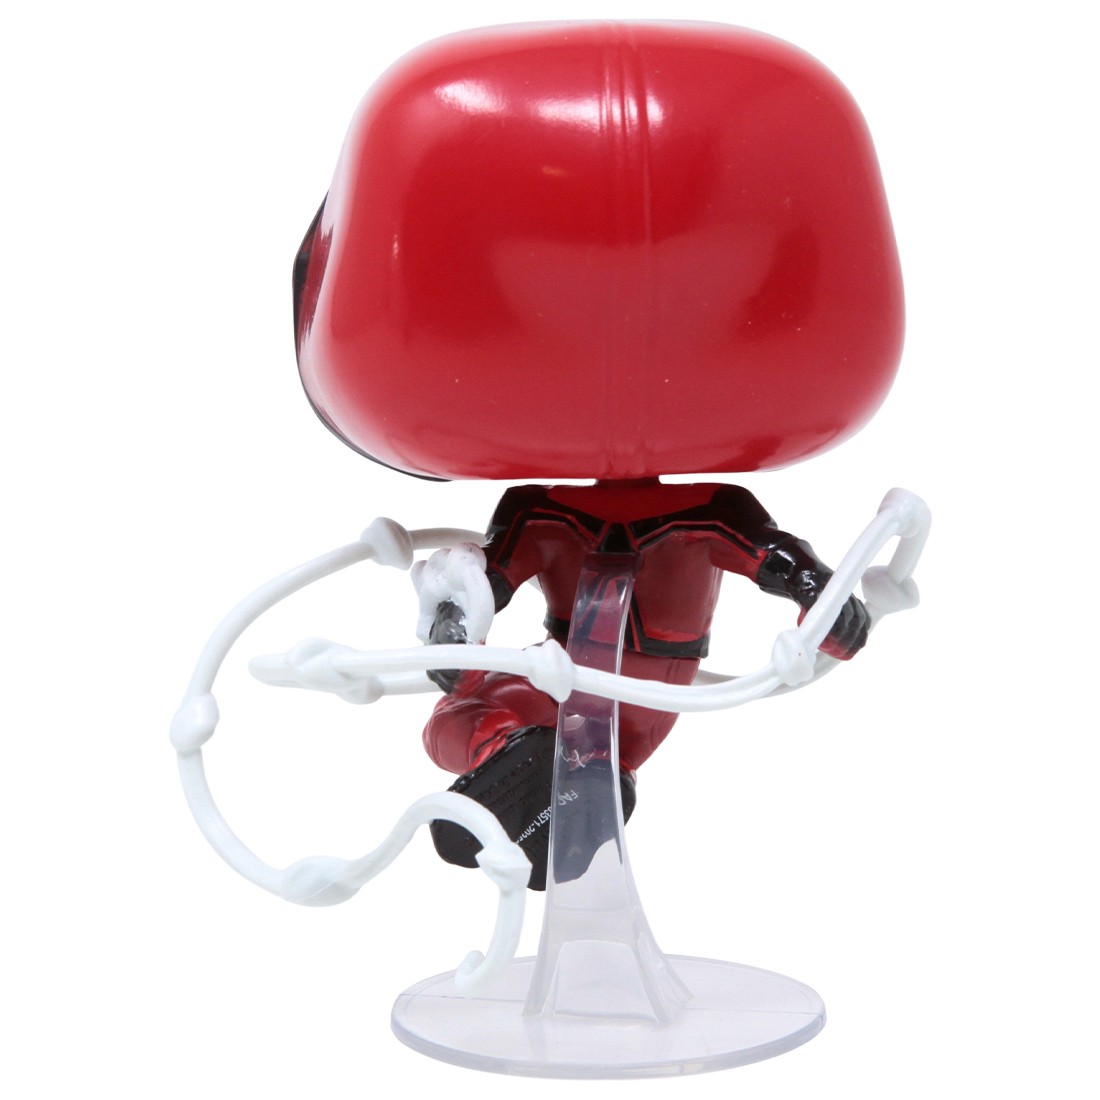 Funko POP! Games - Spider-Man (Miles Morales) - Crimson Cowl Suit